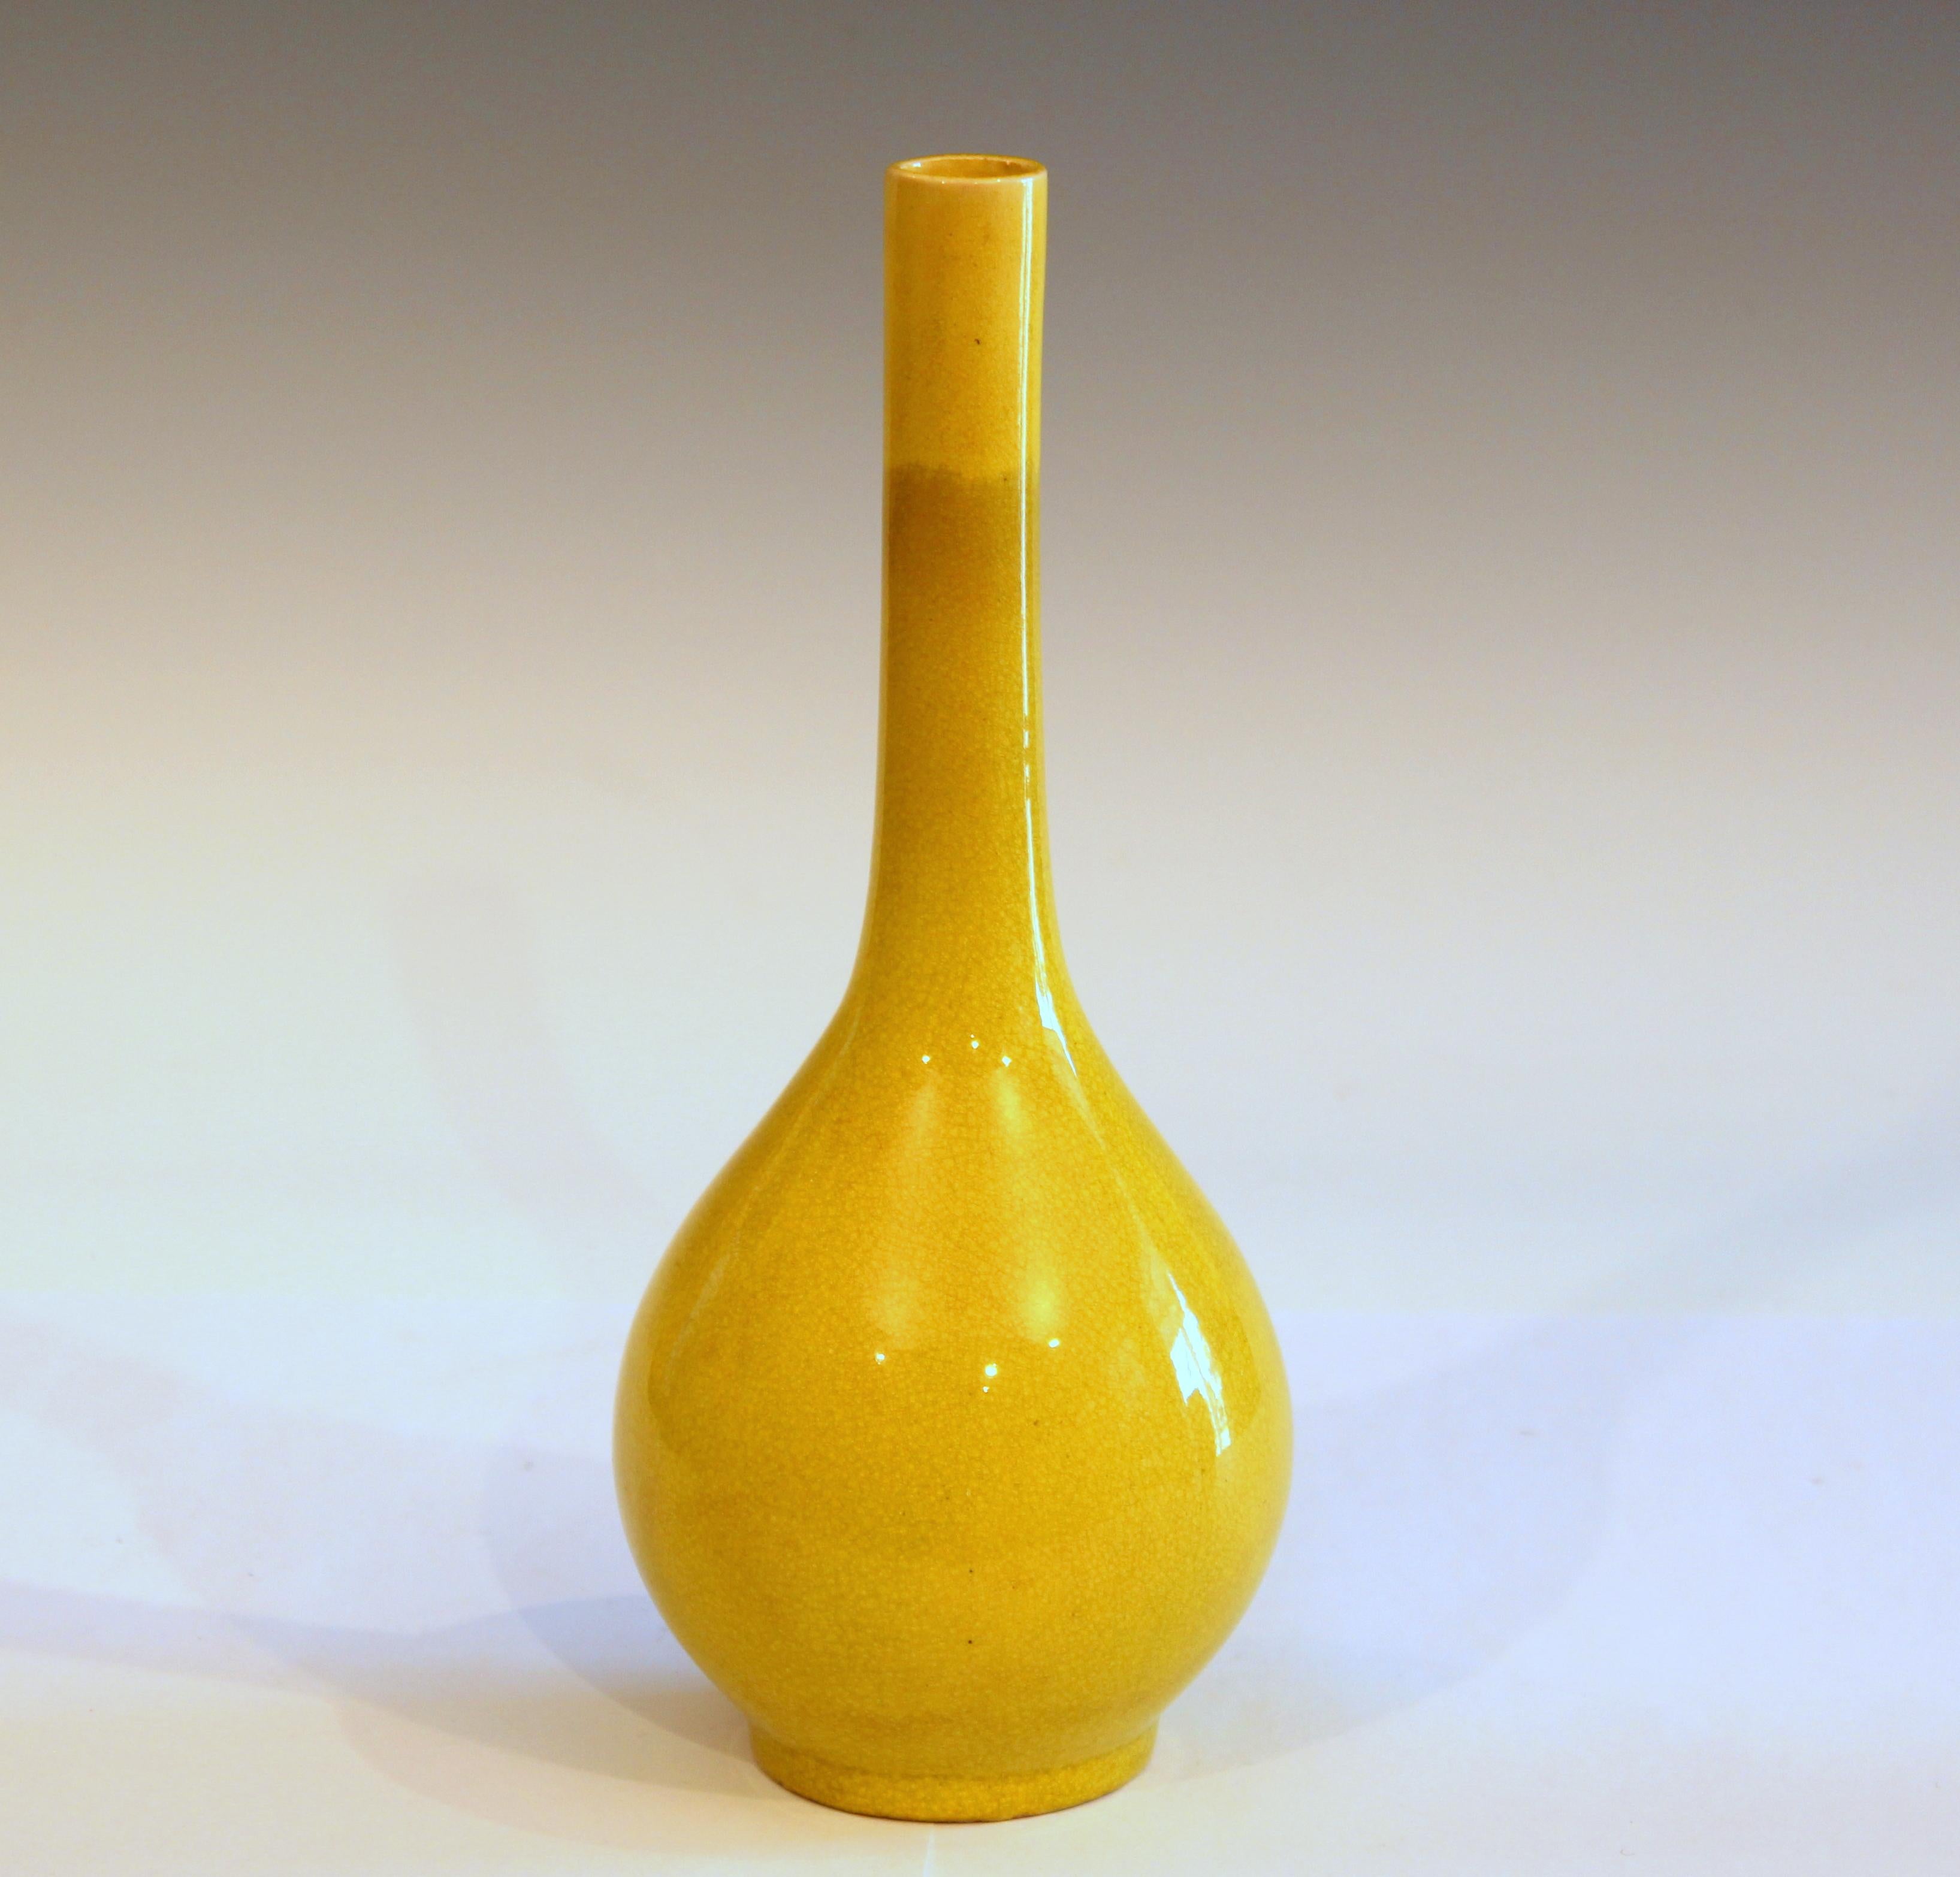 Antique Awaji Pottery point bottle vase in bright yellow monochrome crackle glaze, circa 1910s. Measure: 10